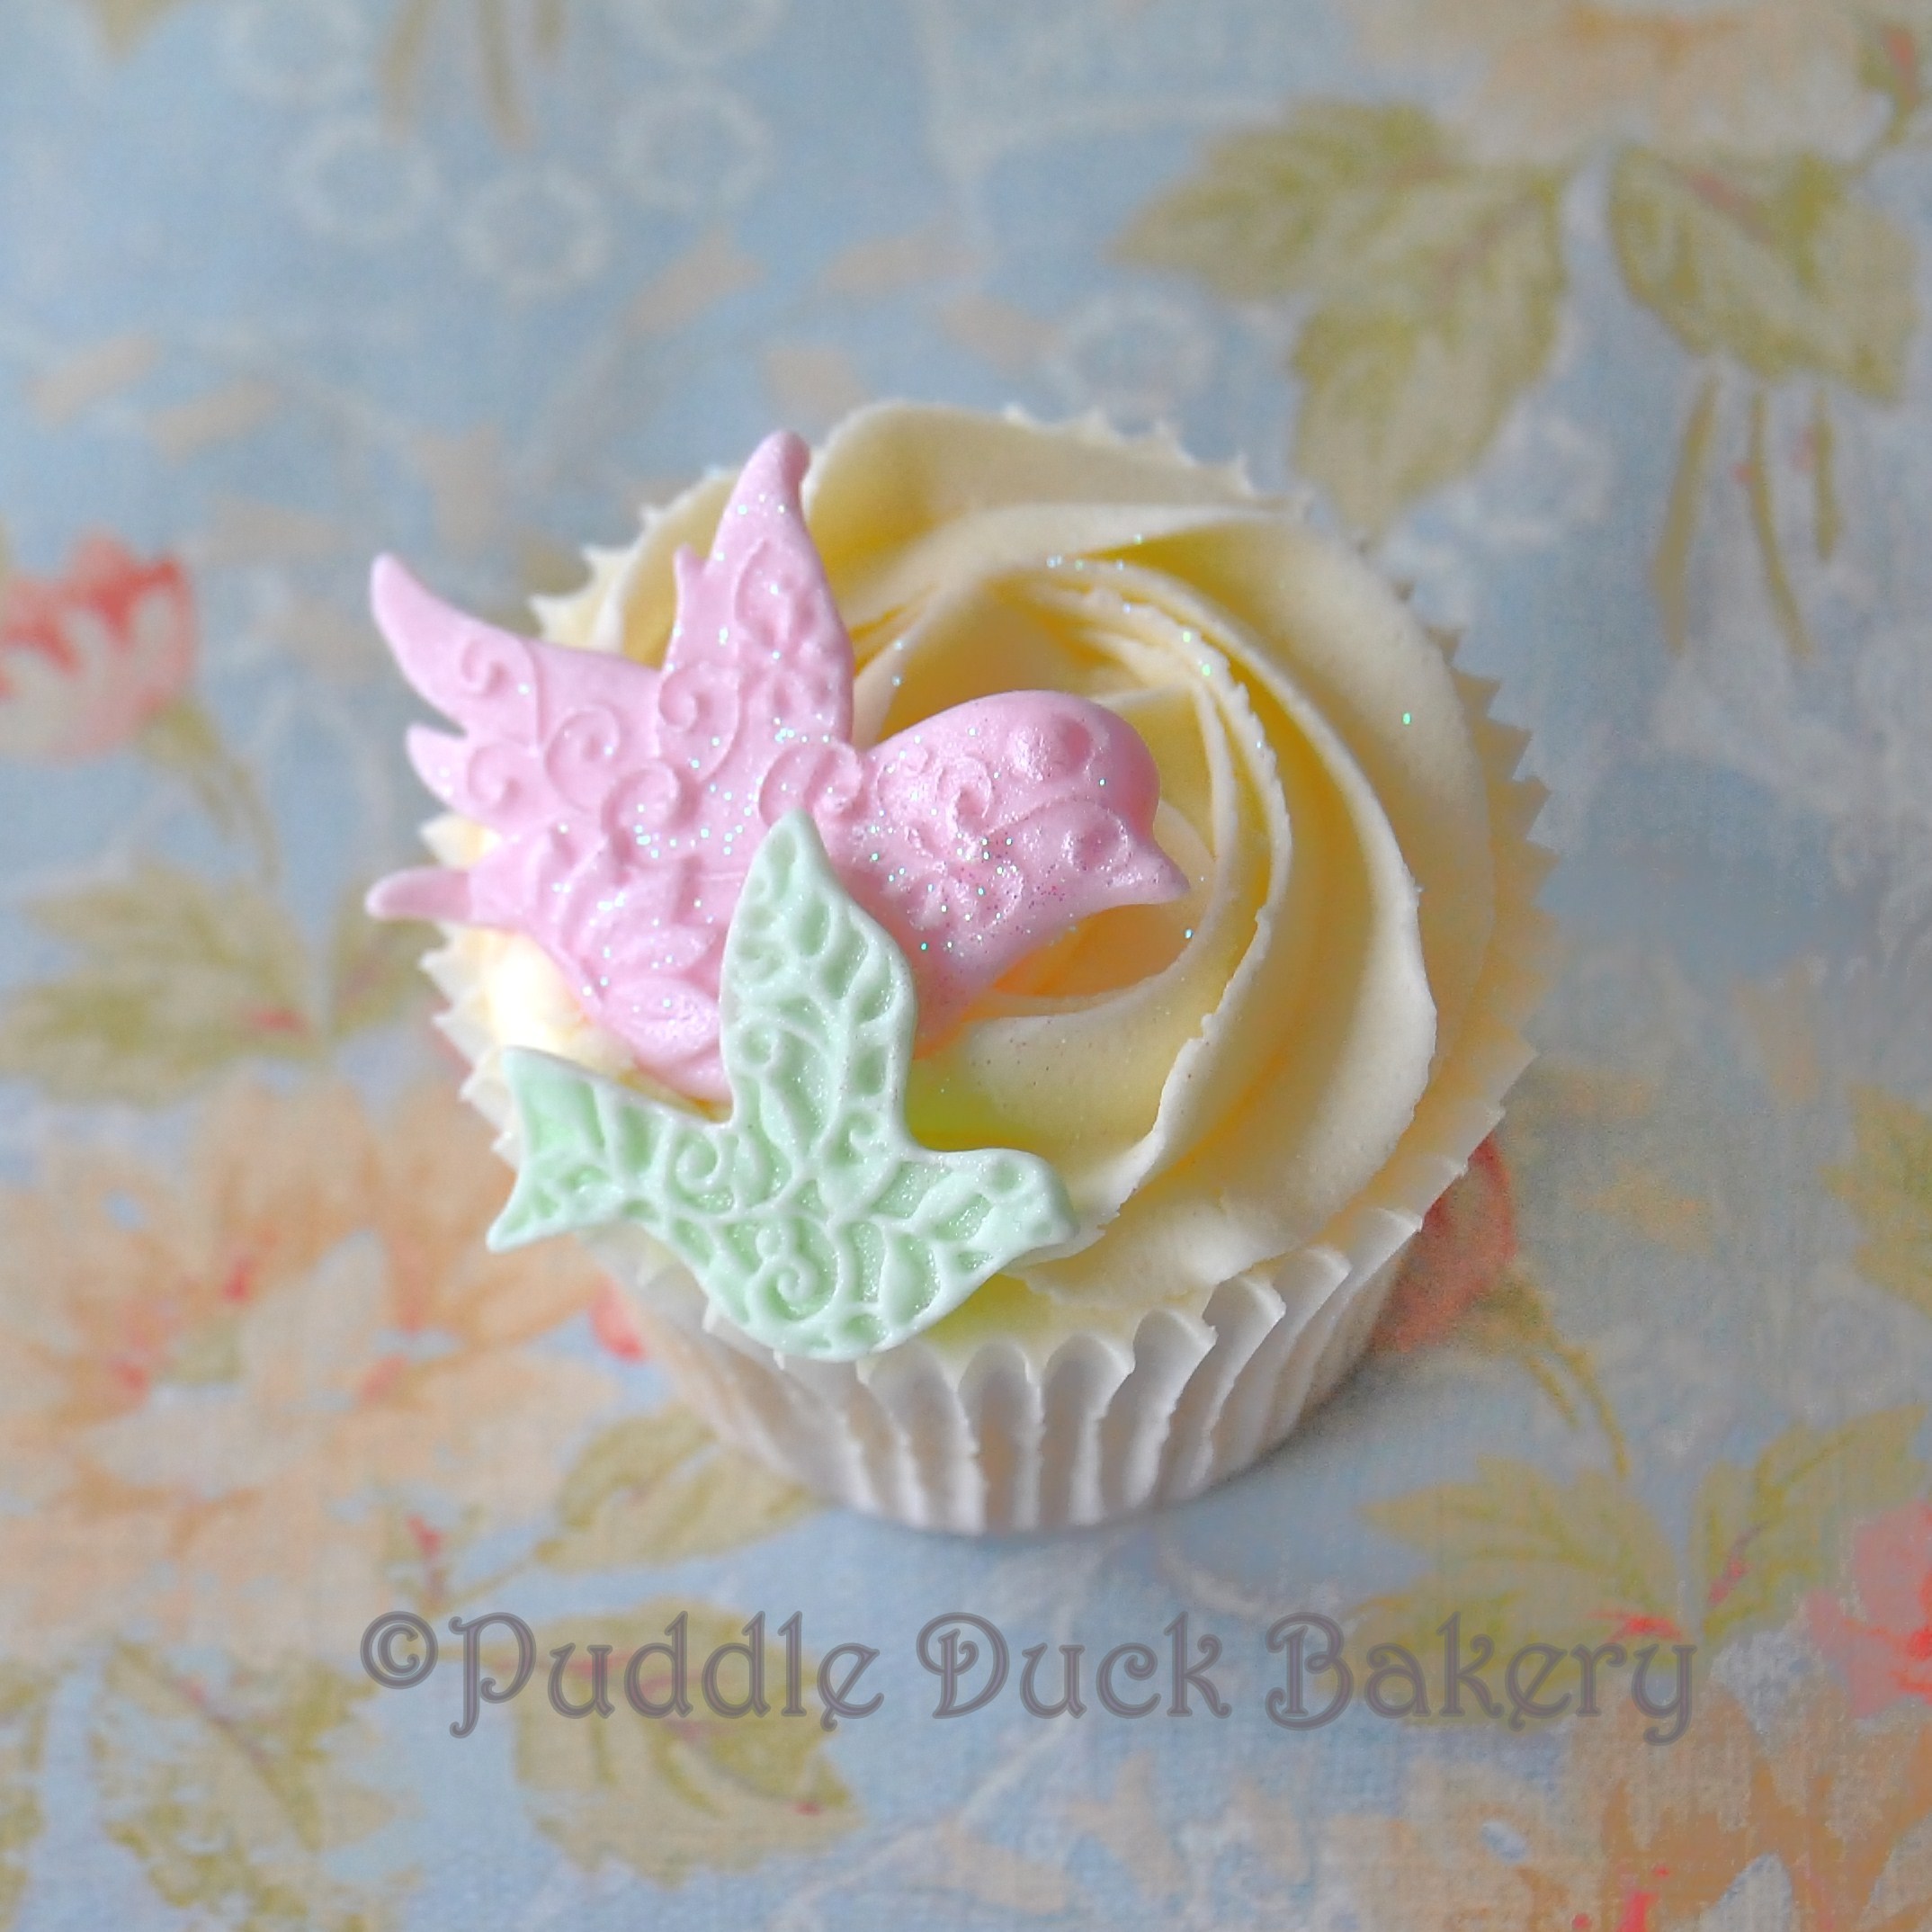 Gorgeous textured birds on a cupcake